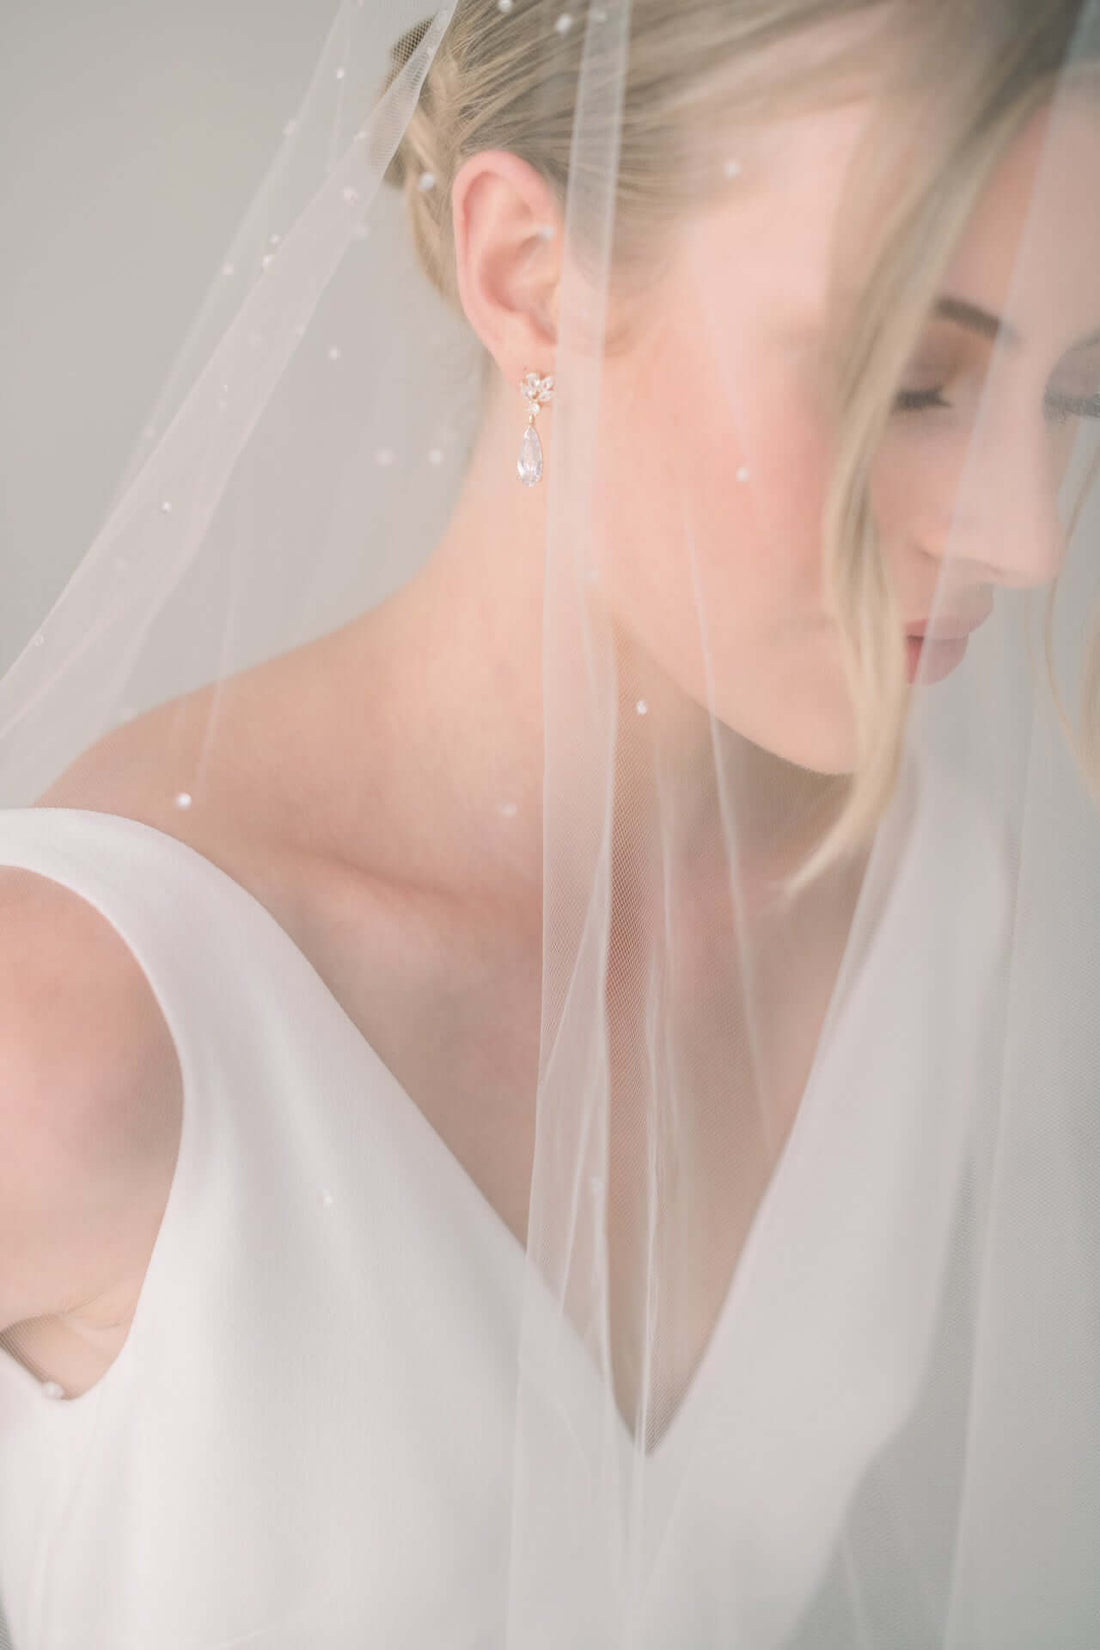 can you steam a wedding veil?